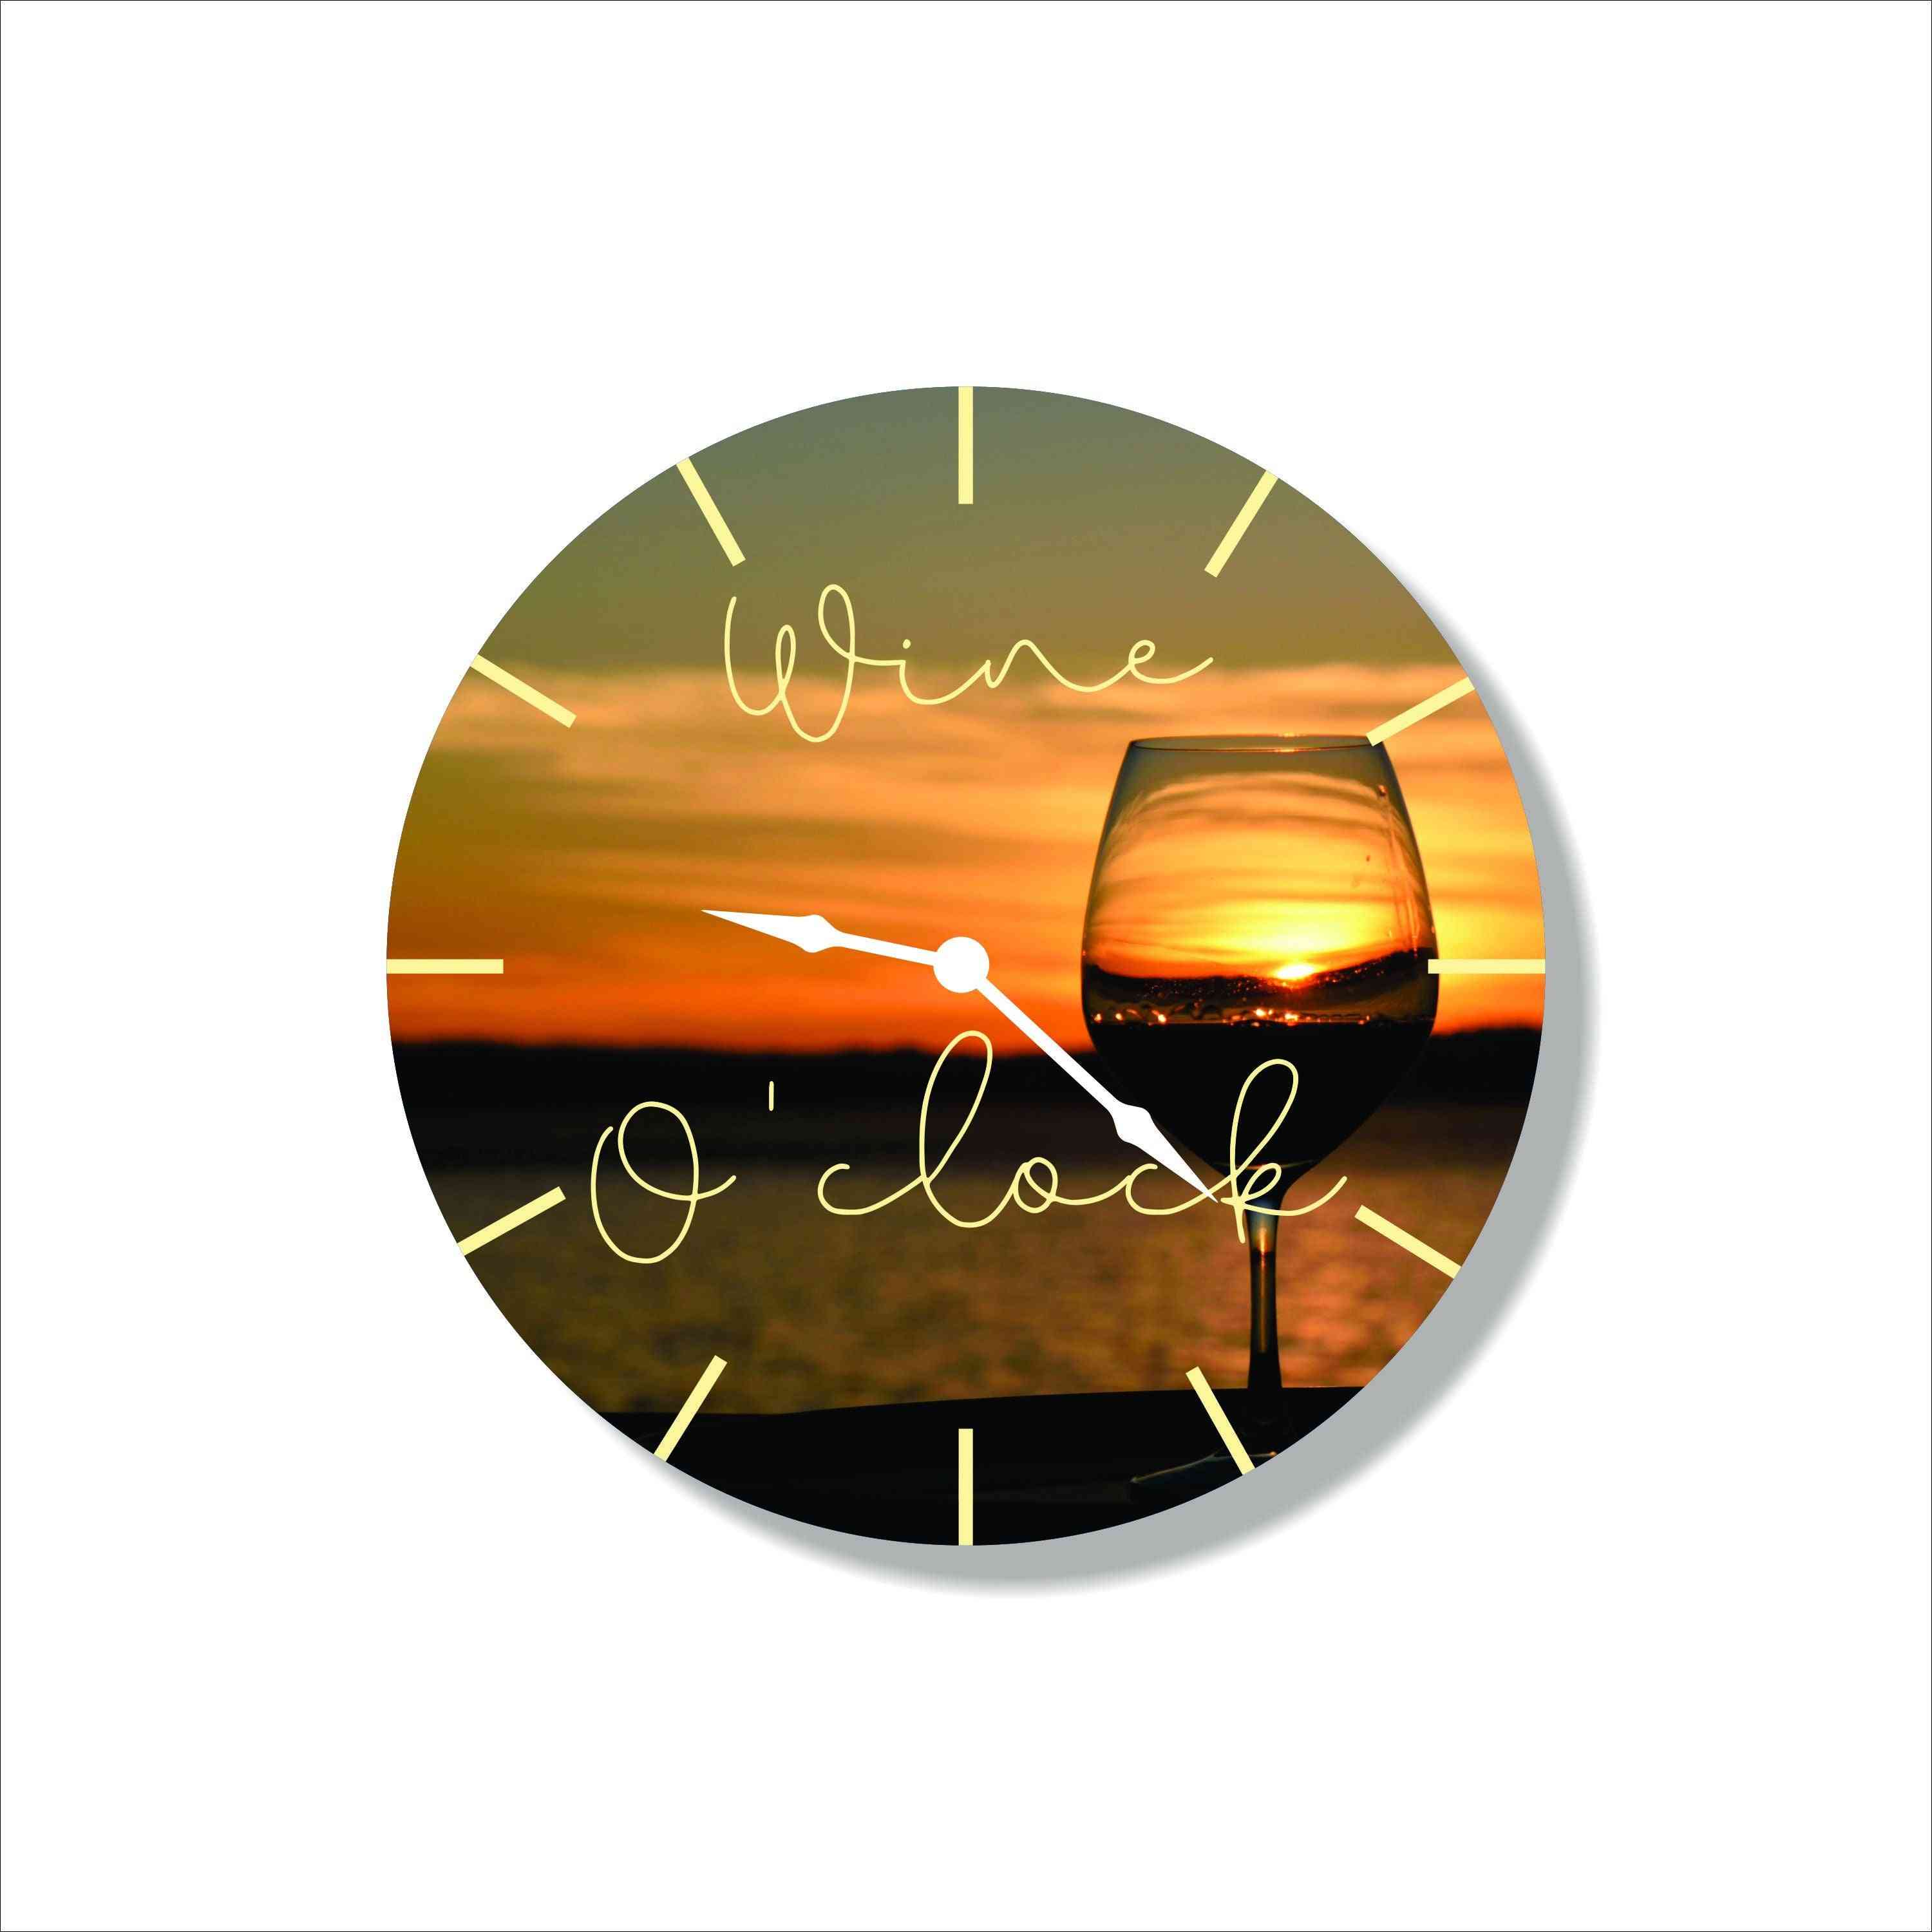 Vivid Images Wine Themed Clock